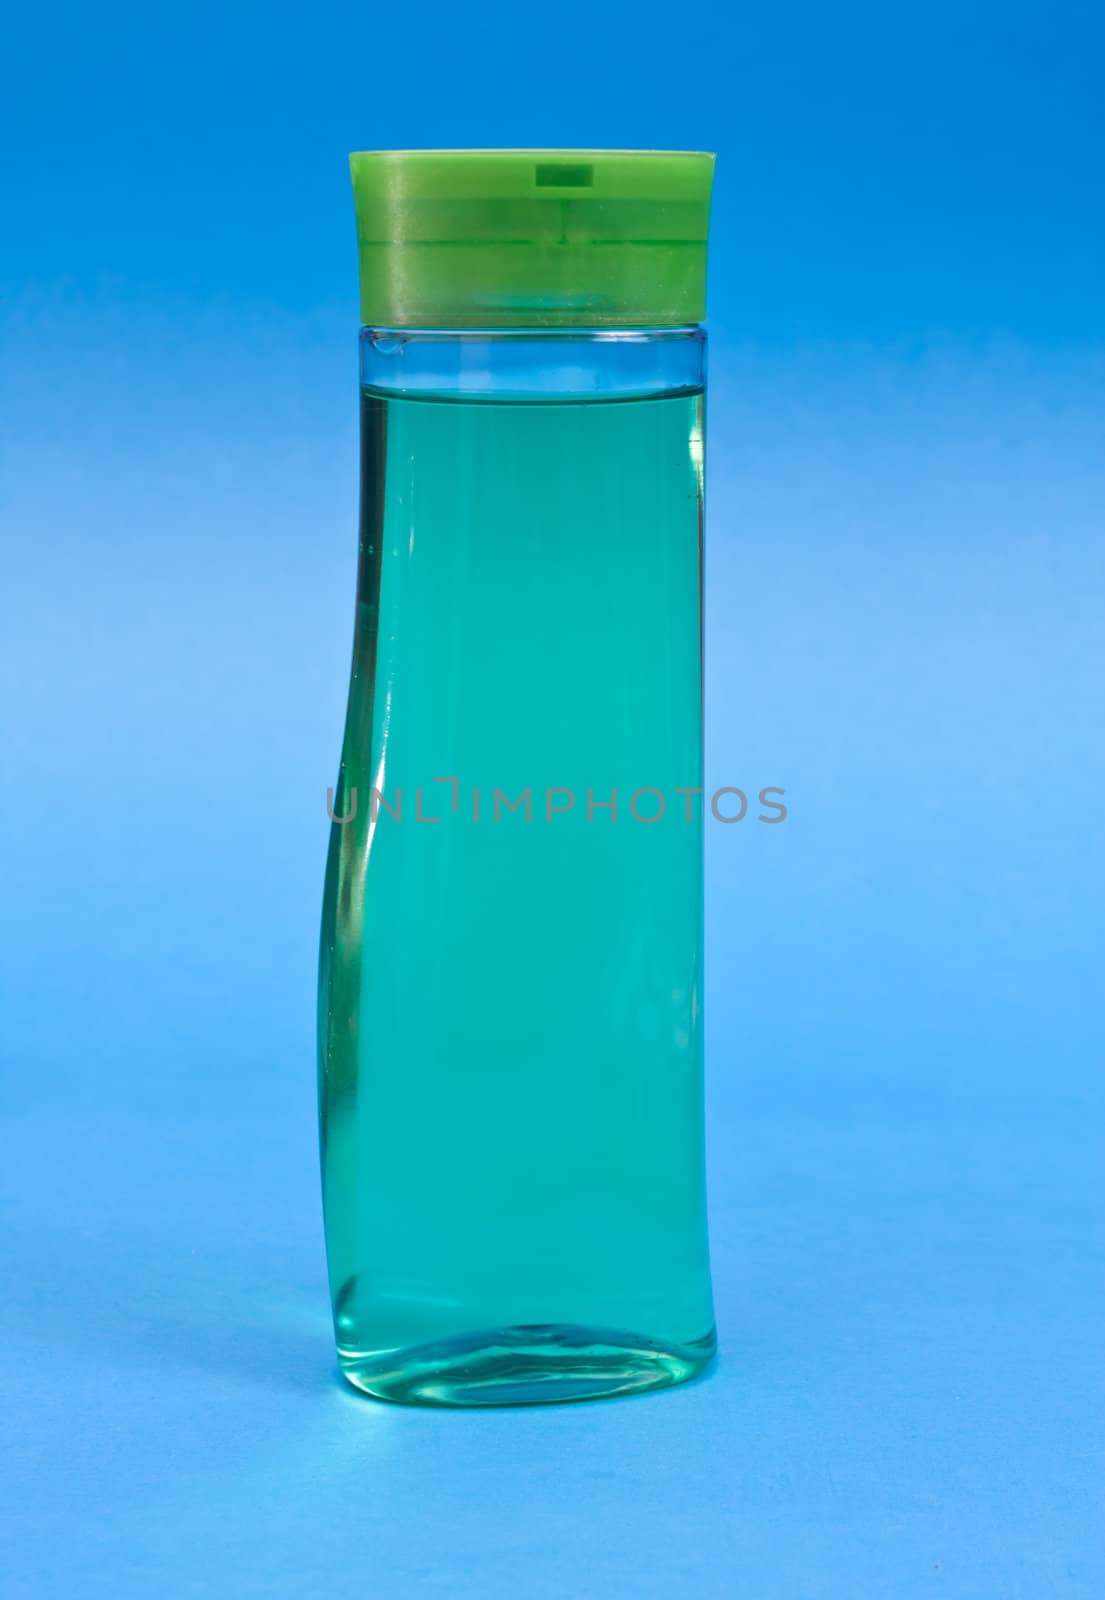 Plastic shampoo bottle by aleksan